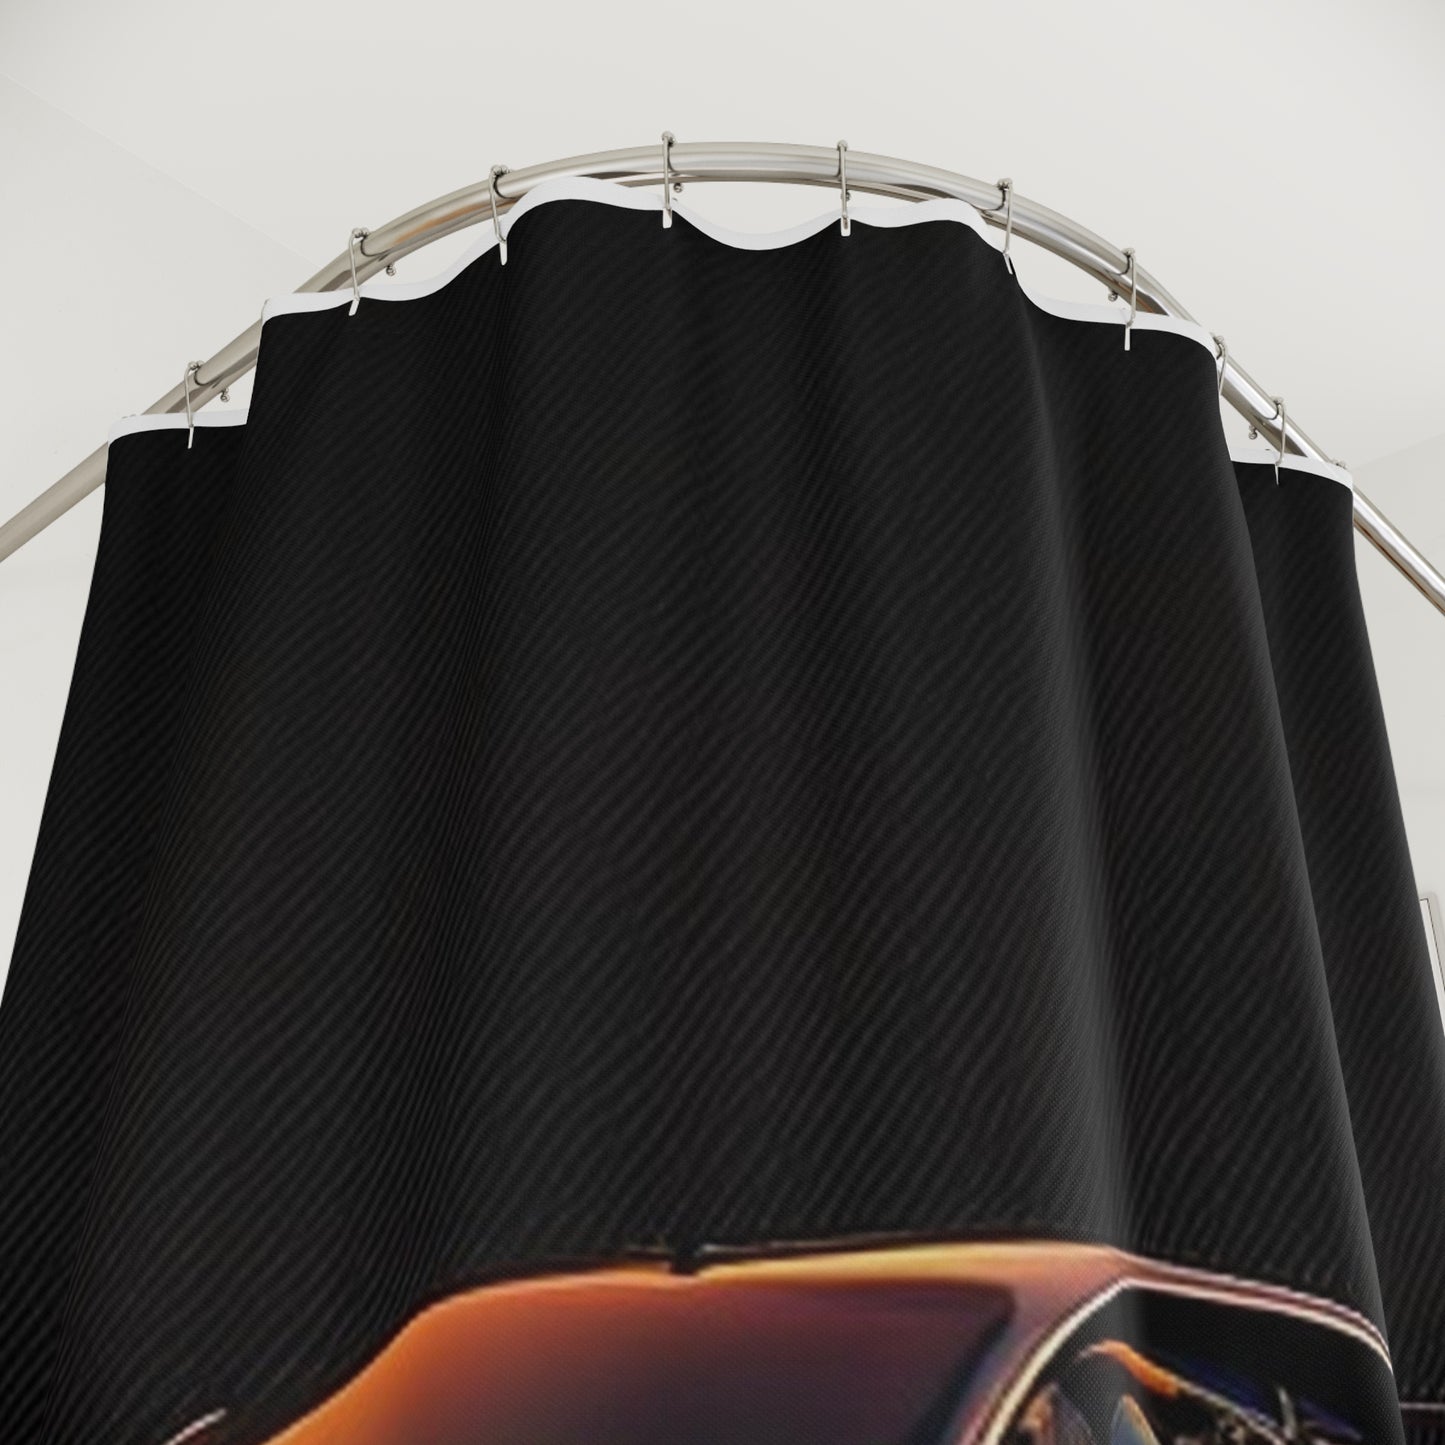 Polyester Shower Curtain Bugatti Chiron Super 4